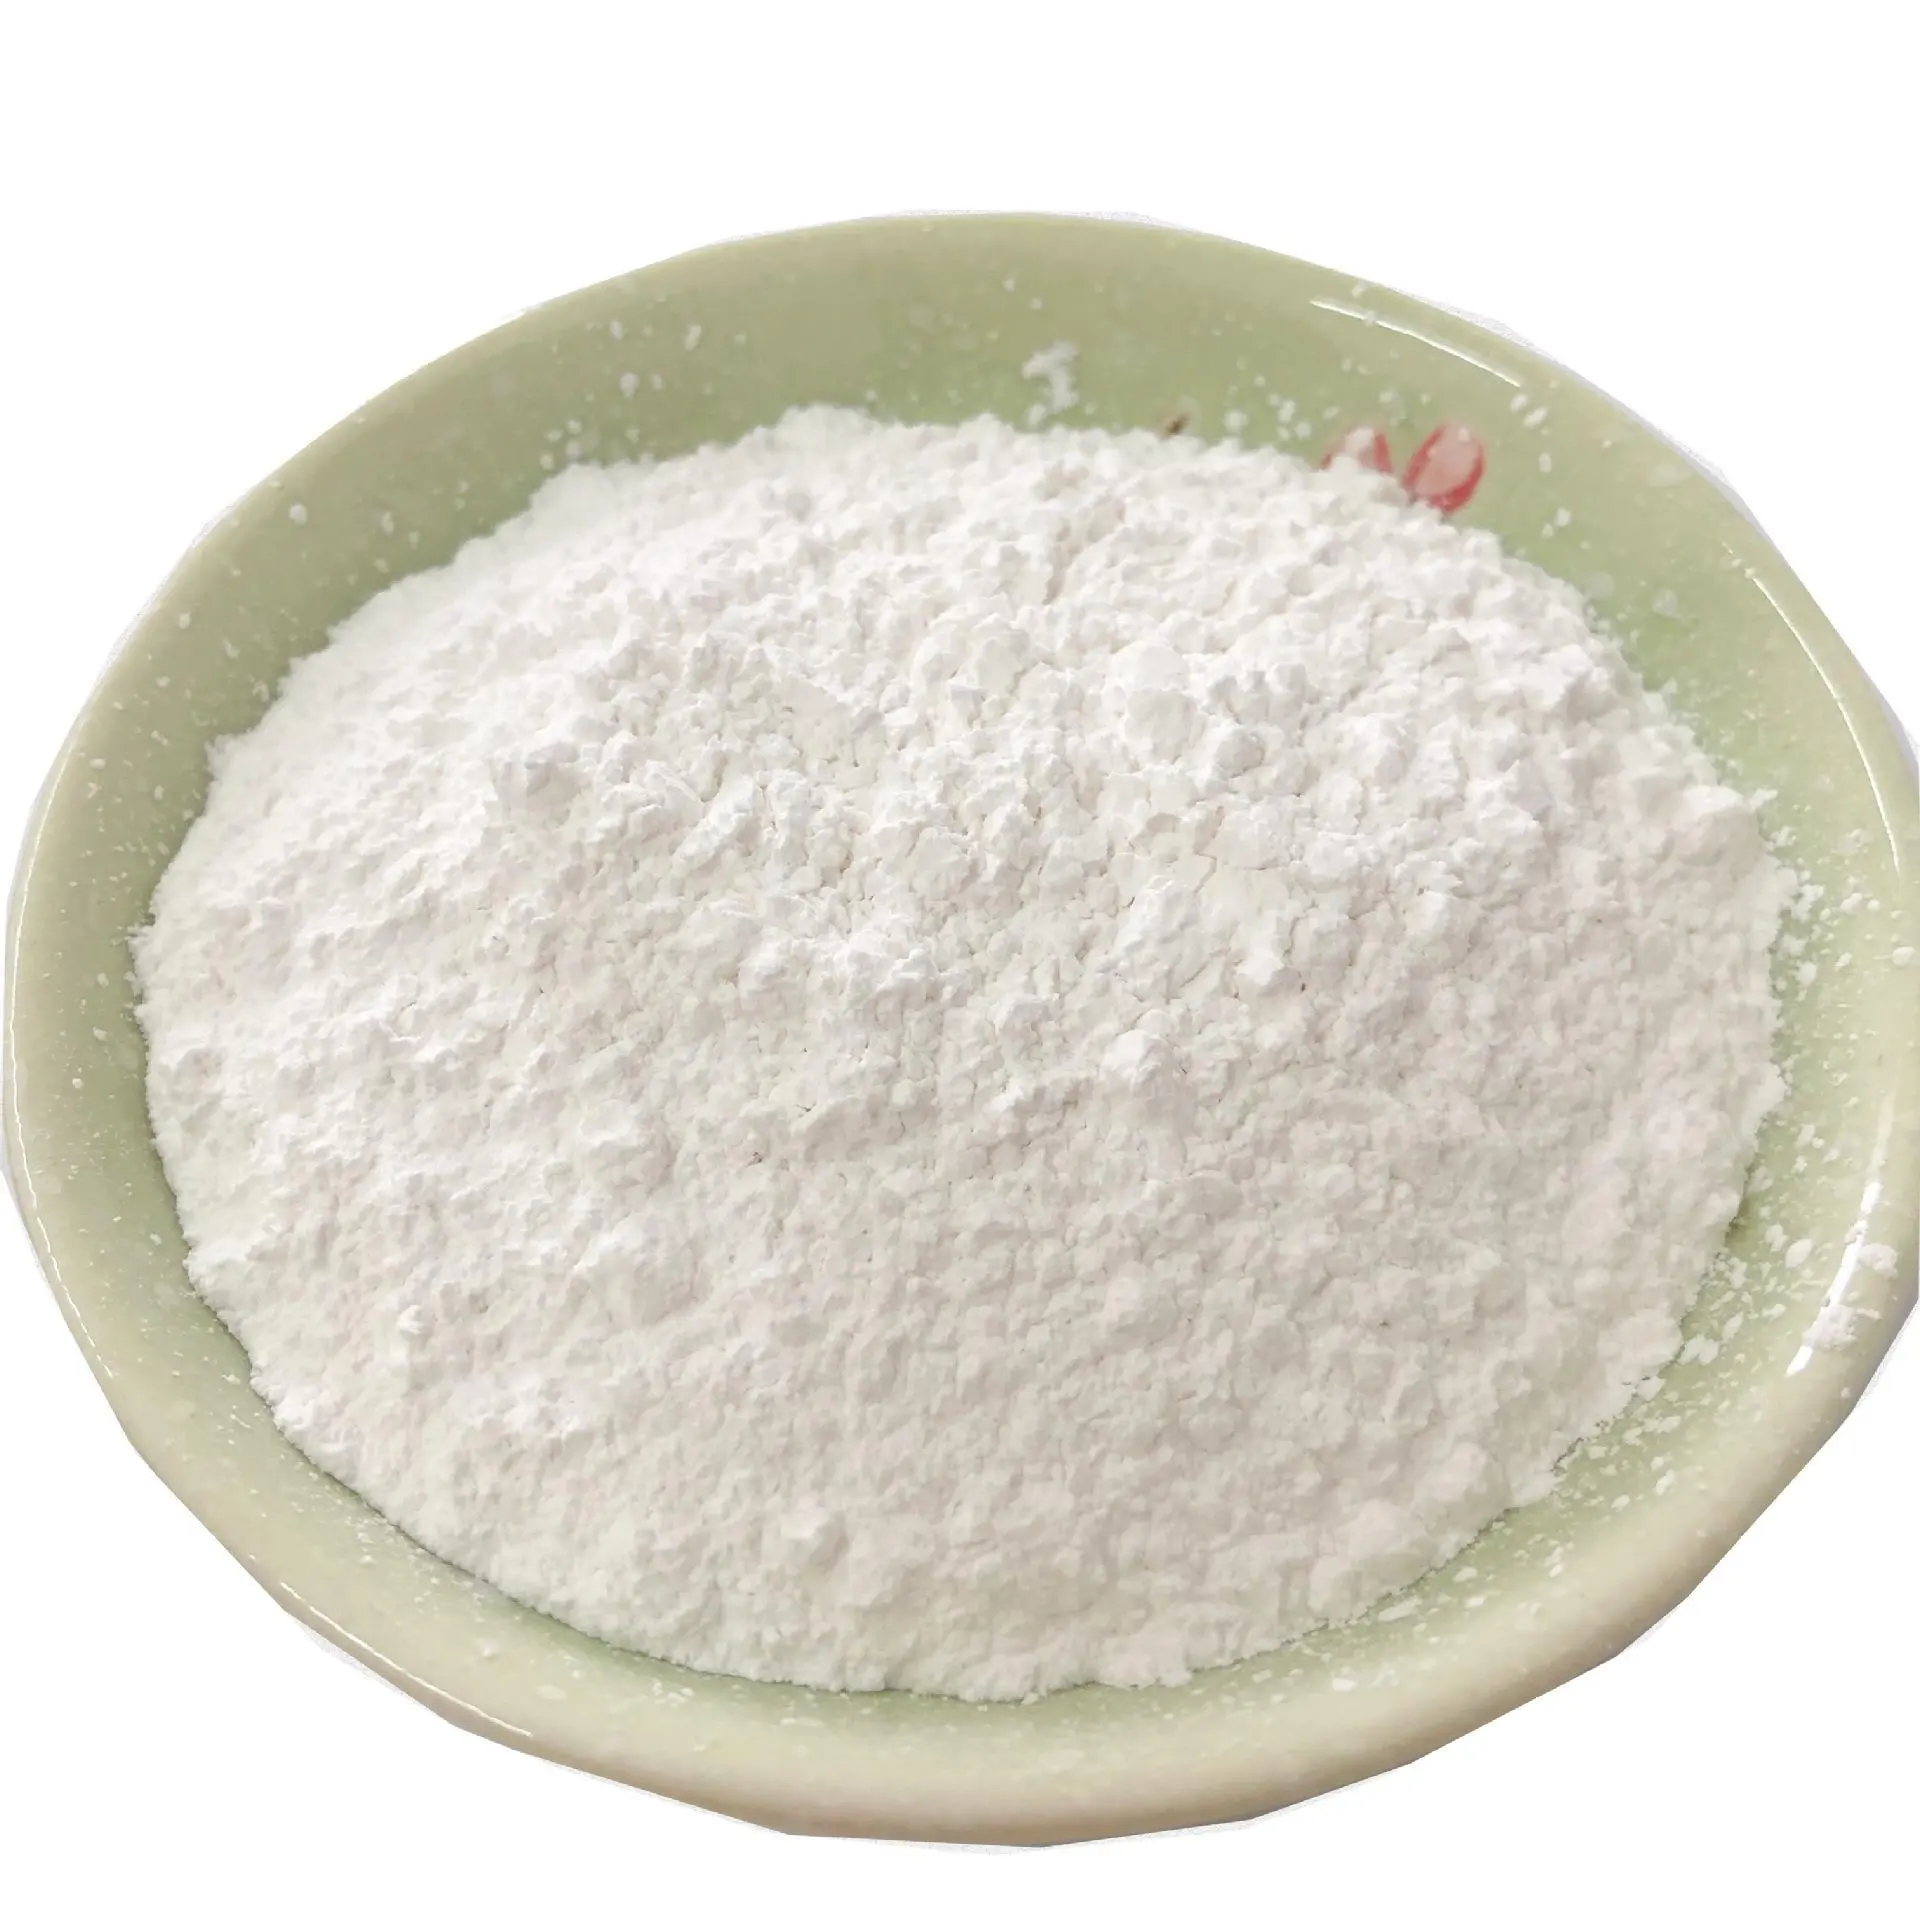 vietnam caco3 powder Aquatic Calcium Stone Powder Manufacturer From Vietnam Supplier Cheap Price For Export